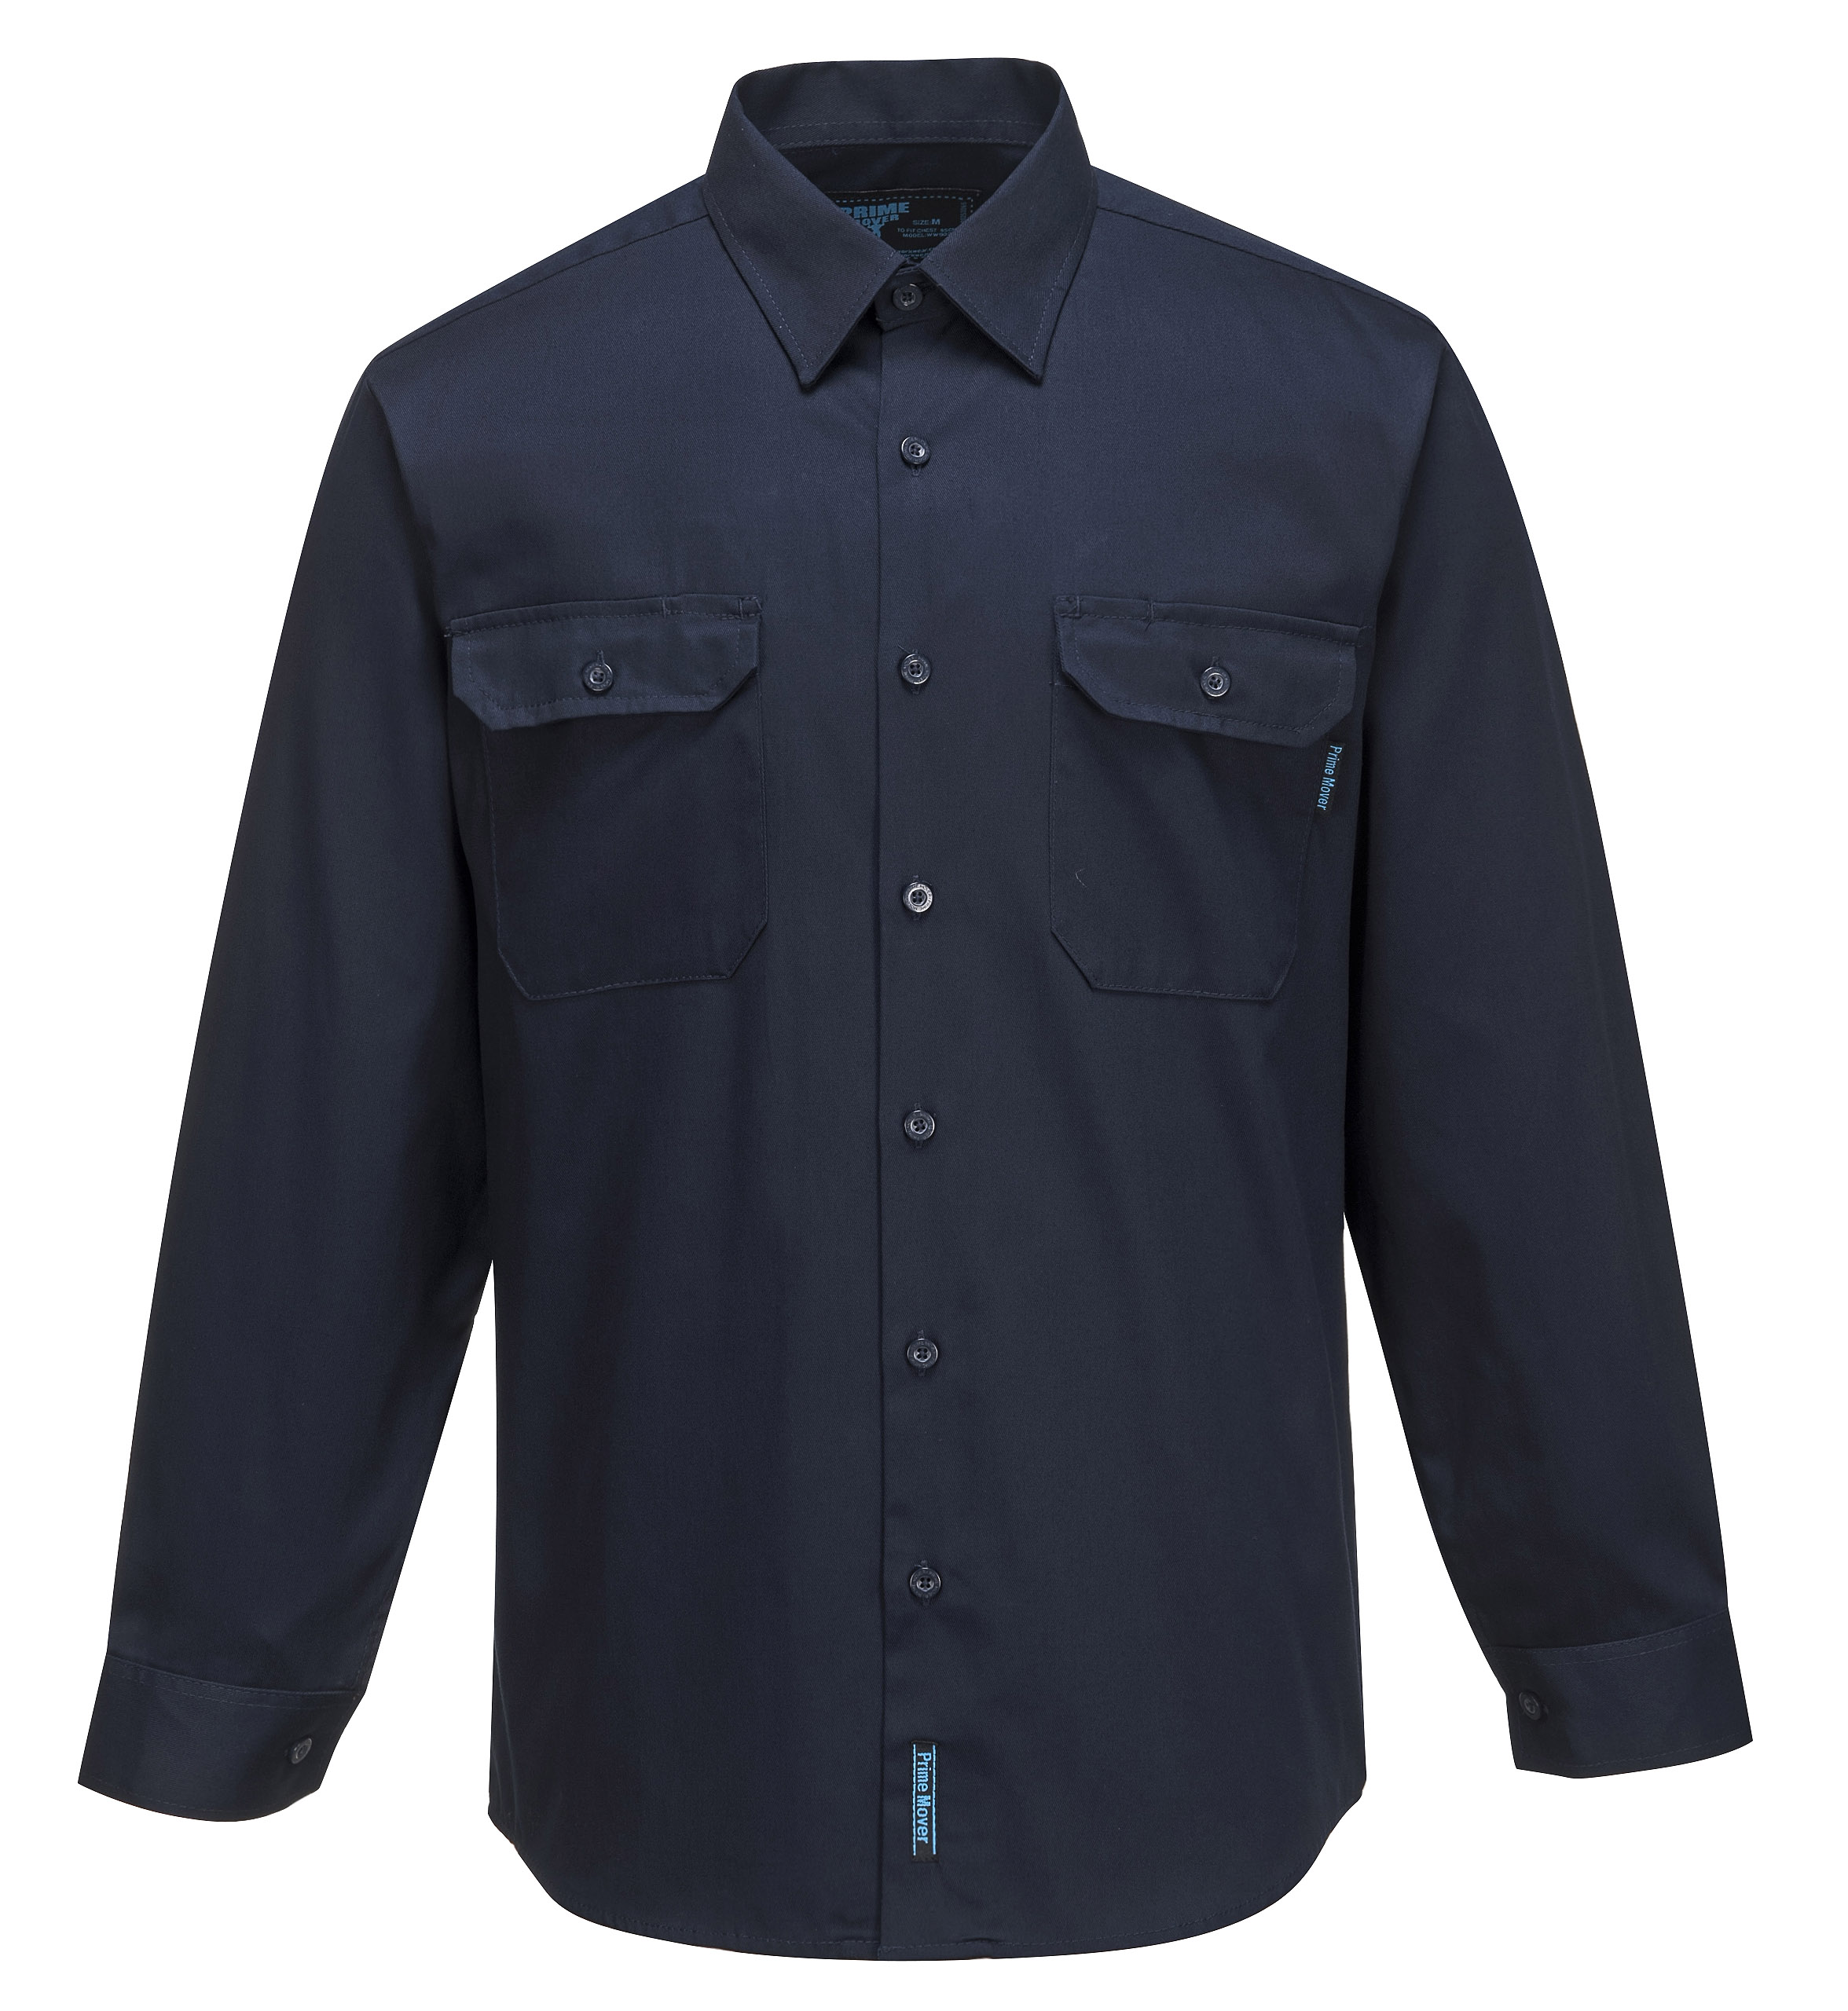 MS903 - Adelaide Shirt, Cotton Long Sleeve, Regular Weight N1